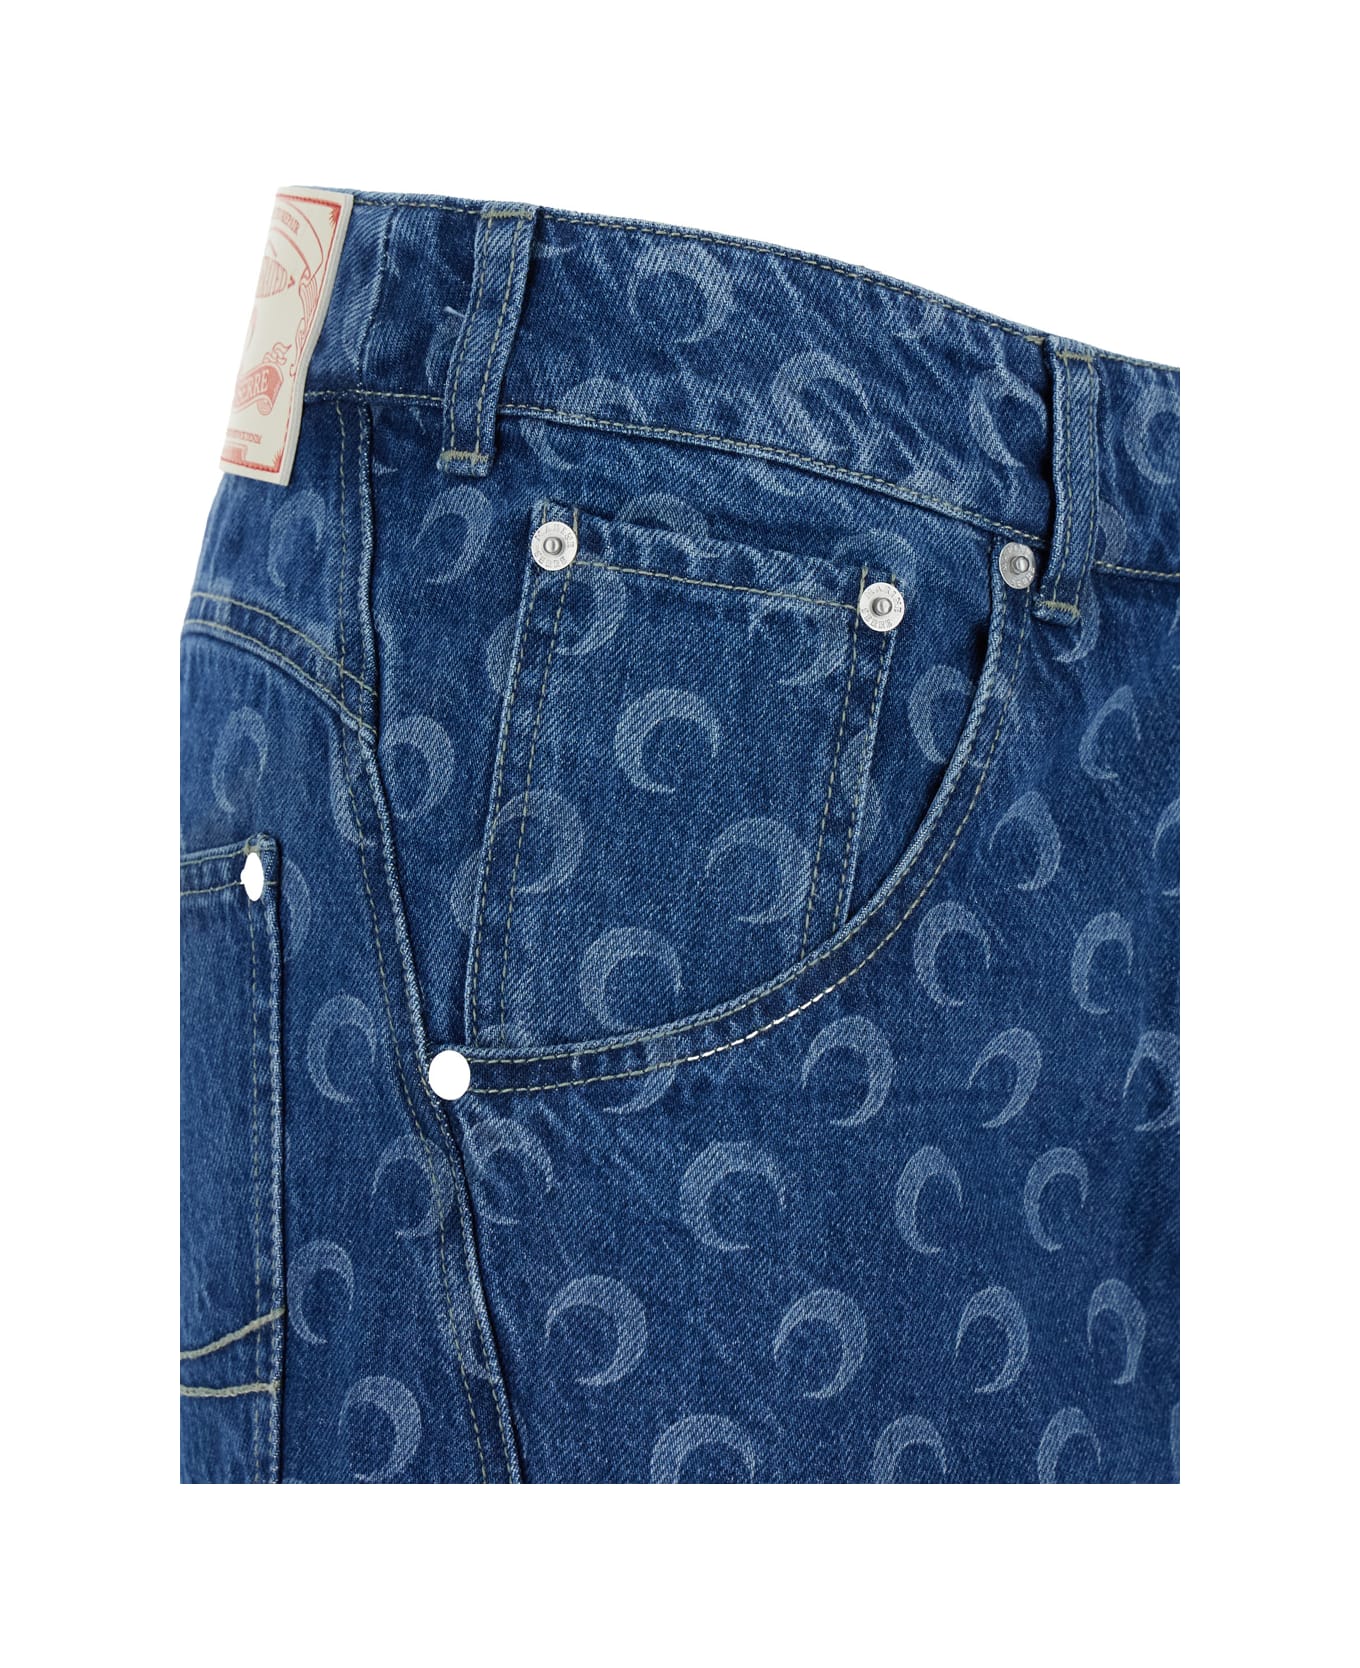 Marine Serre Blue Mini Skirt With 'crescenti Moon' Print In Denim Woman - Blu